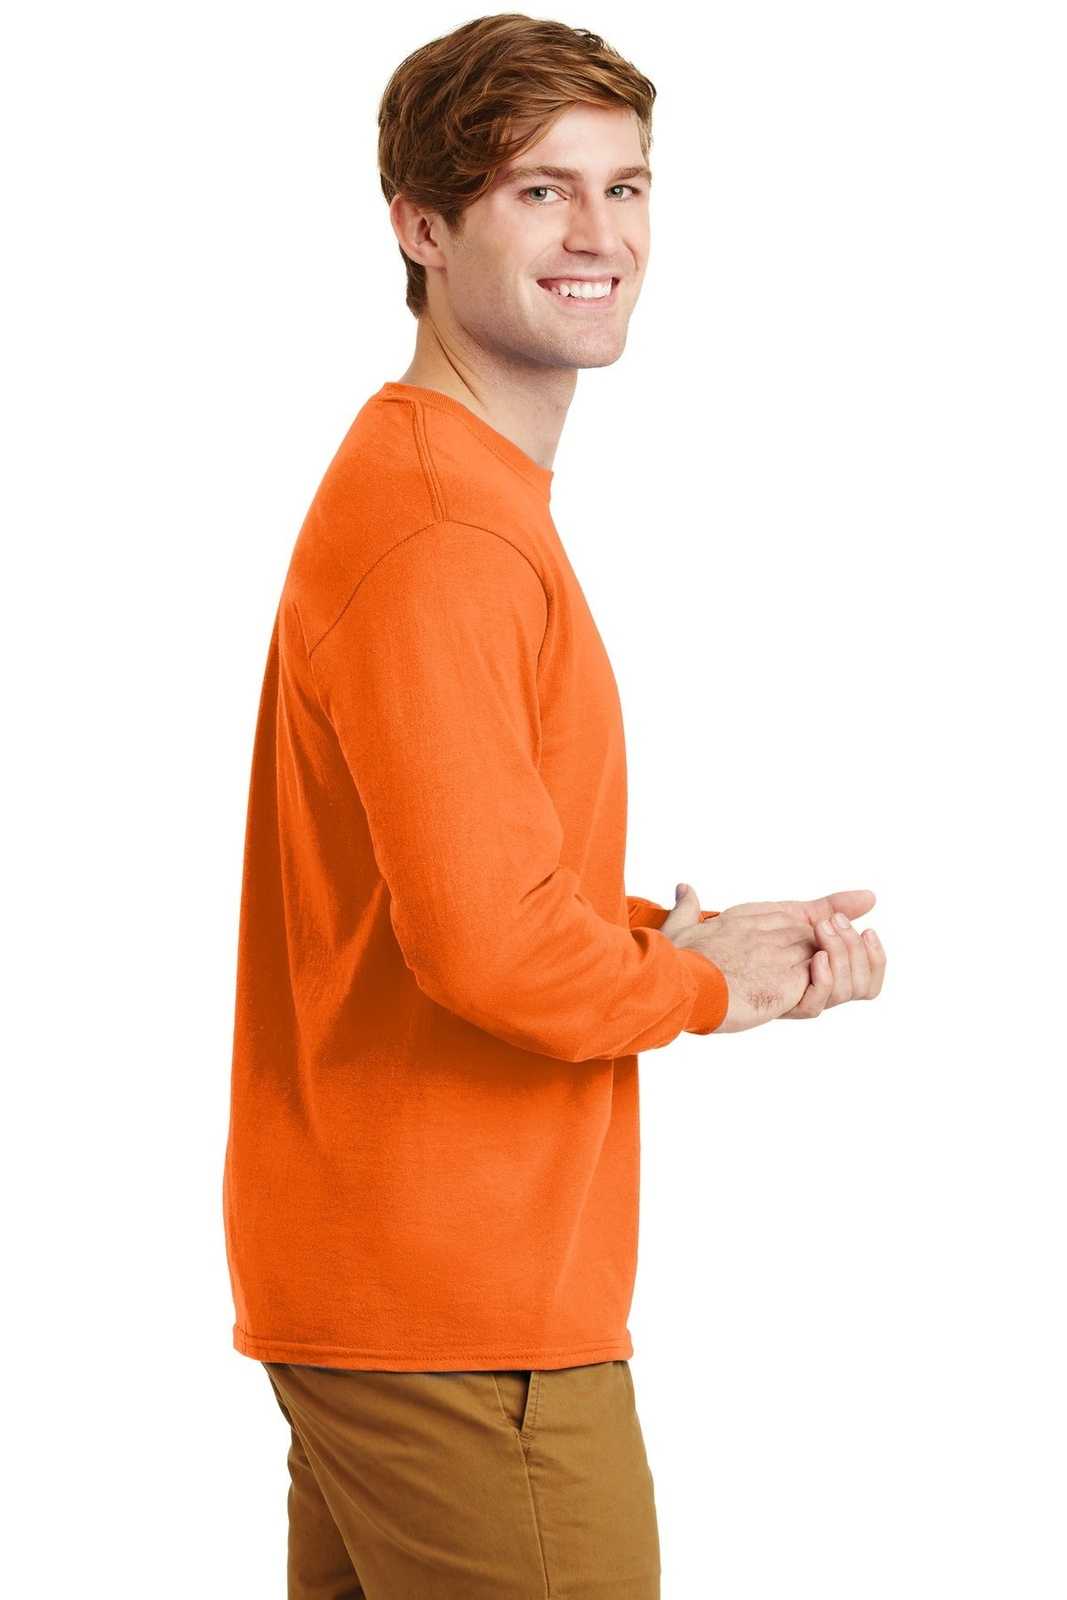 Gildan G2400 Ultra Cotton 100% Cotton Long Sleeve T-Shirt - S. Orange - HIT a Double